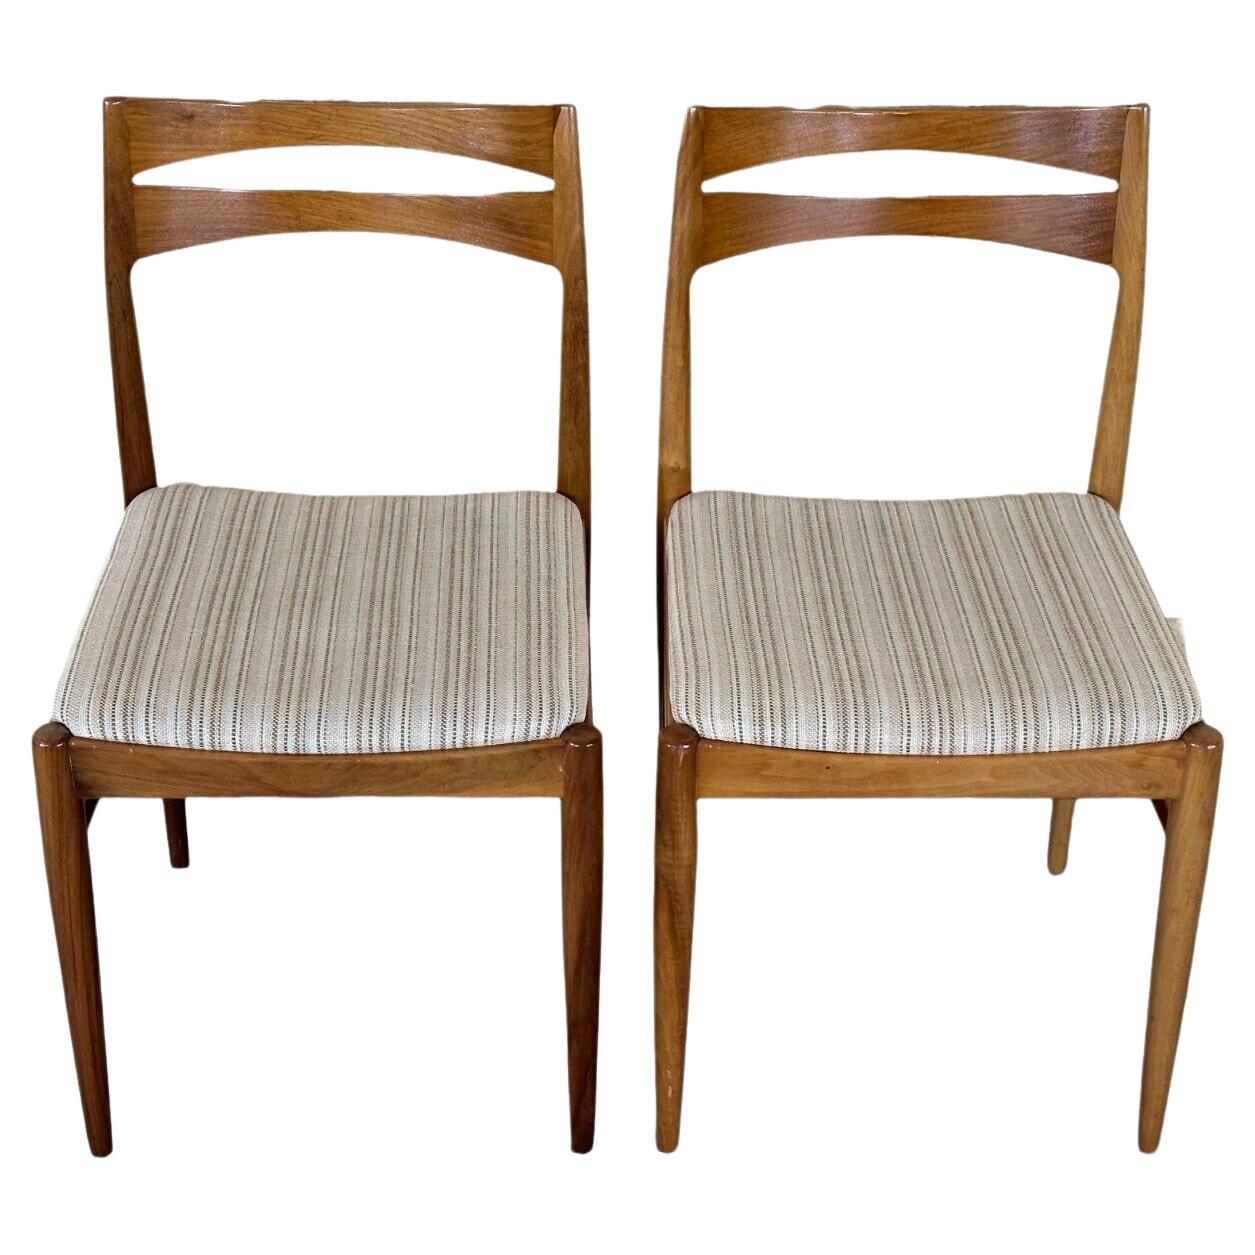 2x 60s 70s dining chair dining chair mid century Danish modern design